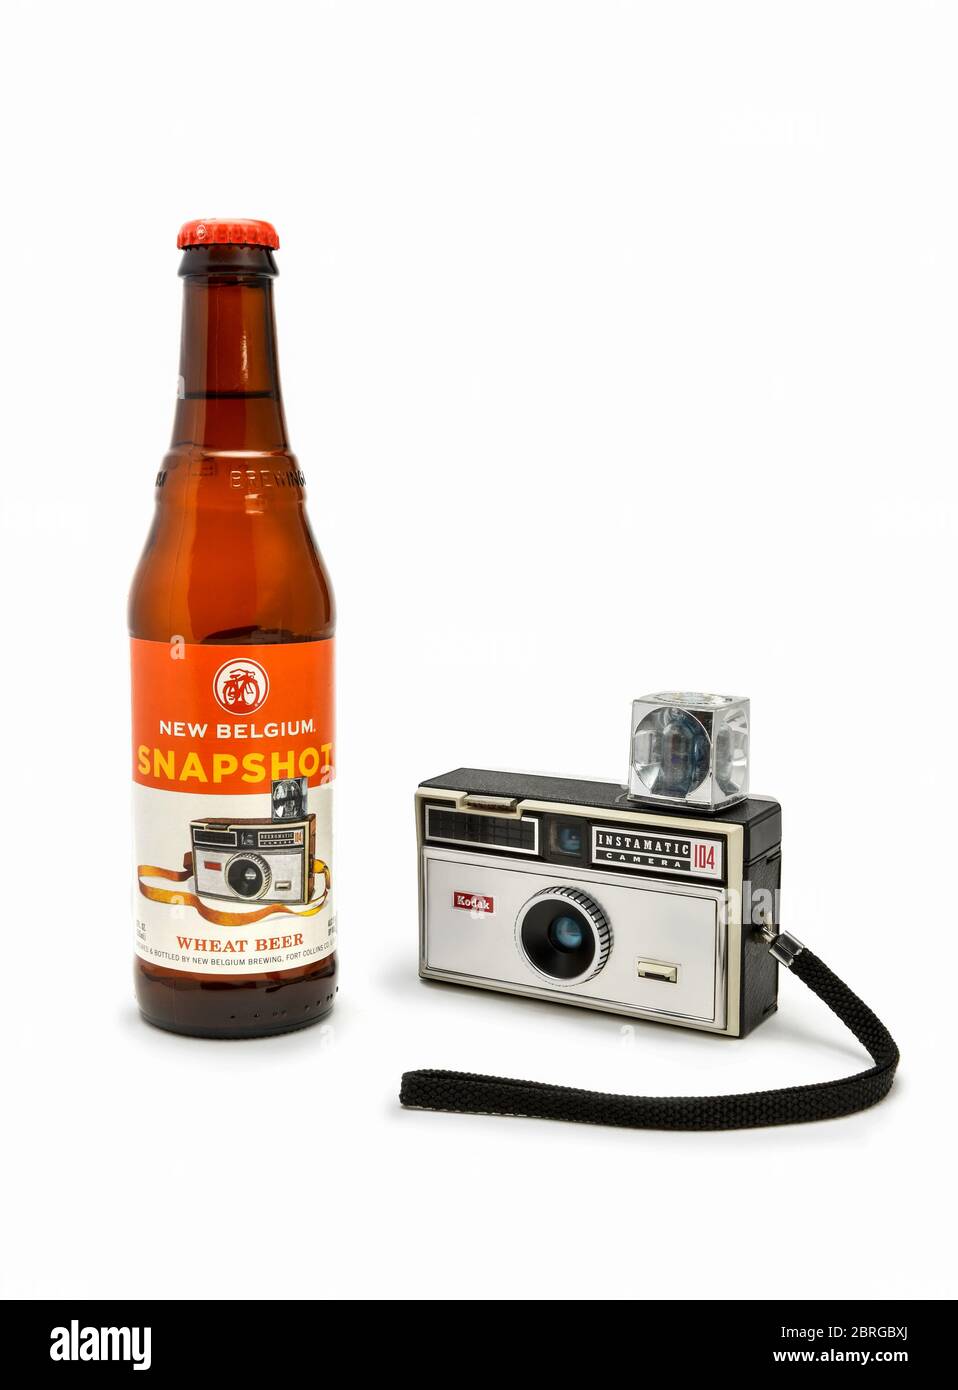 Nuova birra Snapshot Belgium con fotocamera Kodak Promo Foto Stock